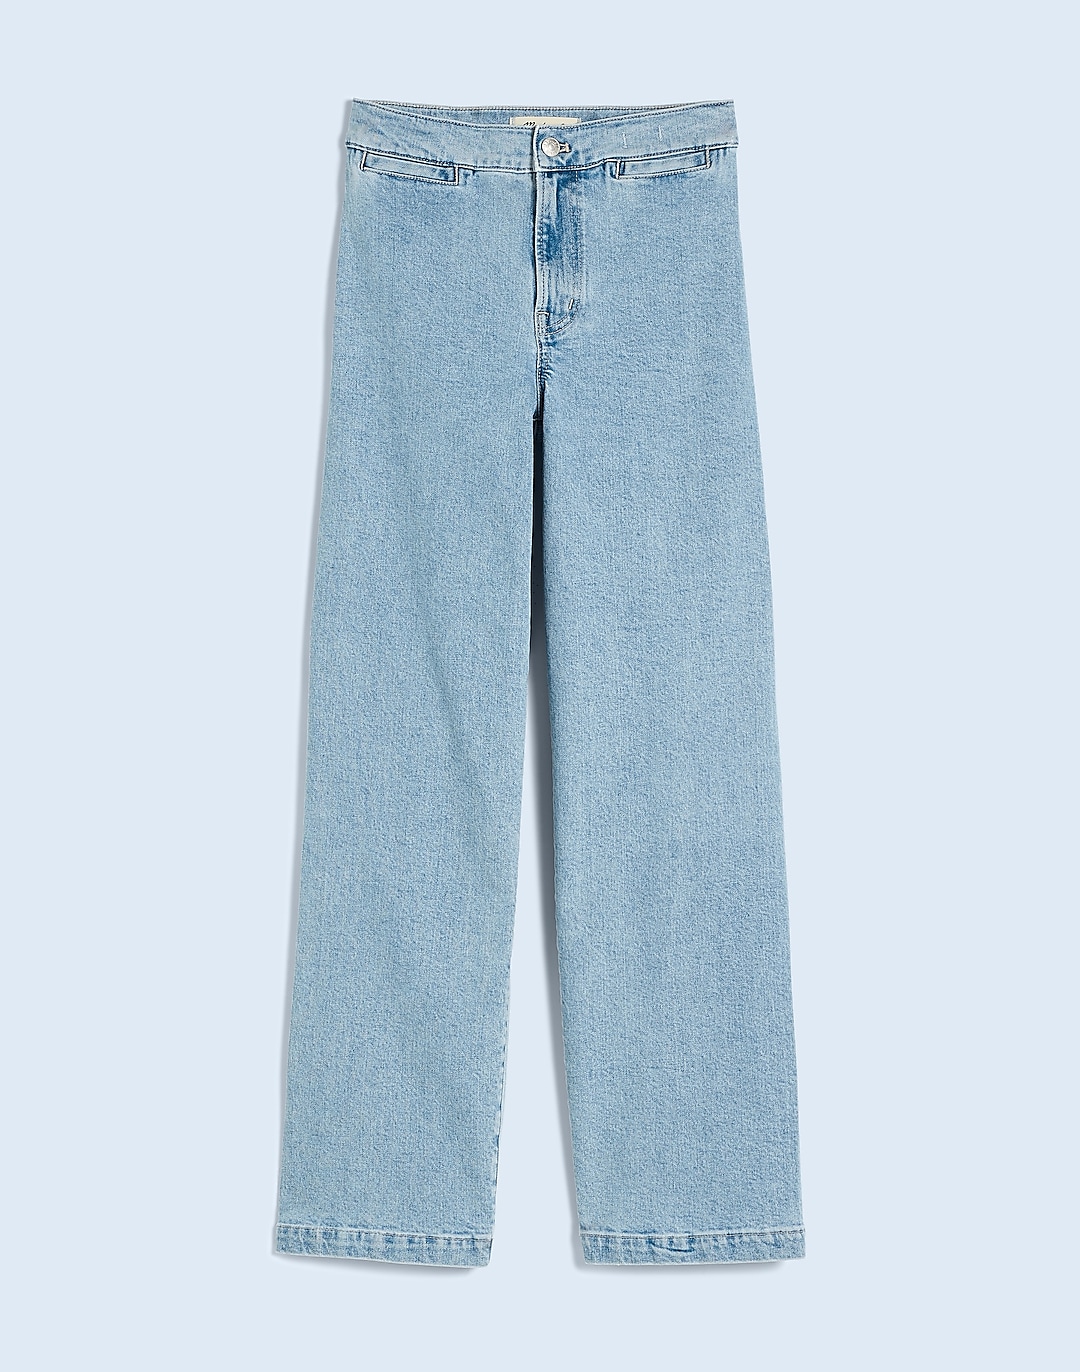 The Petite Emmett Wide-Leg Jean in Kieran Wash: Welt Pocket Edition | Madewell